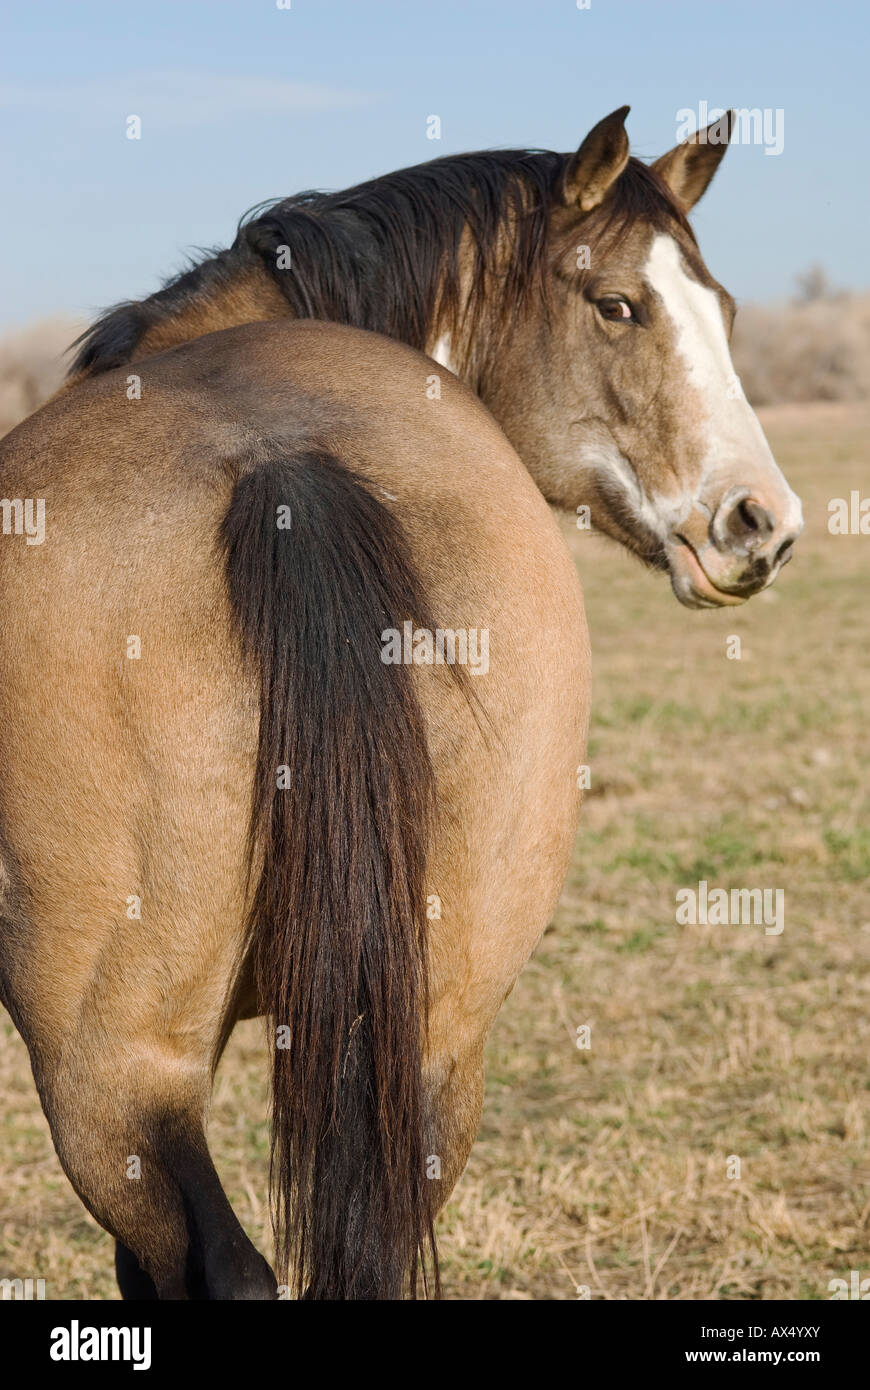 Dun caballo color vista desde la parte trasera del caballo con la cabeza volteada hacia atrás Foto de stock